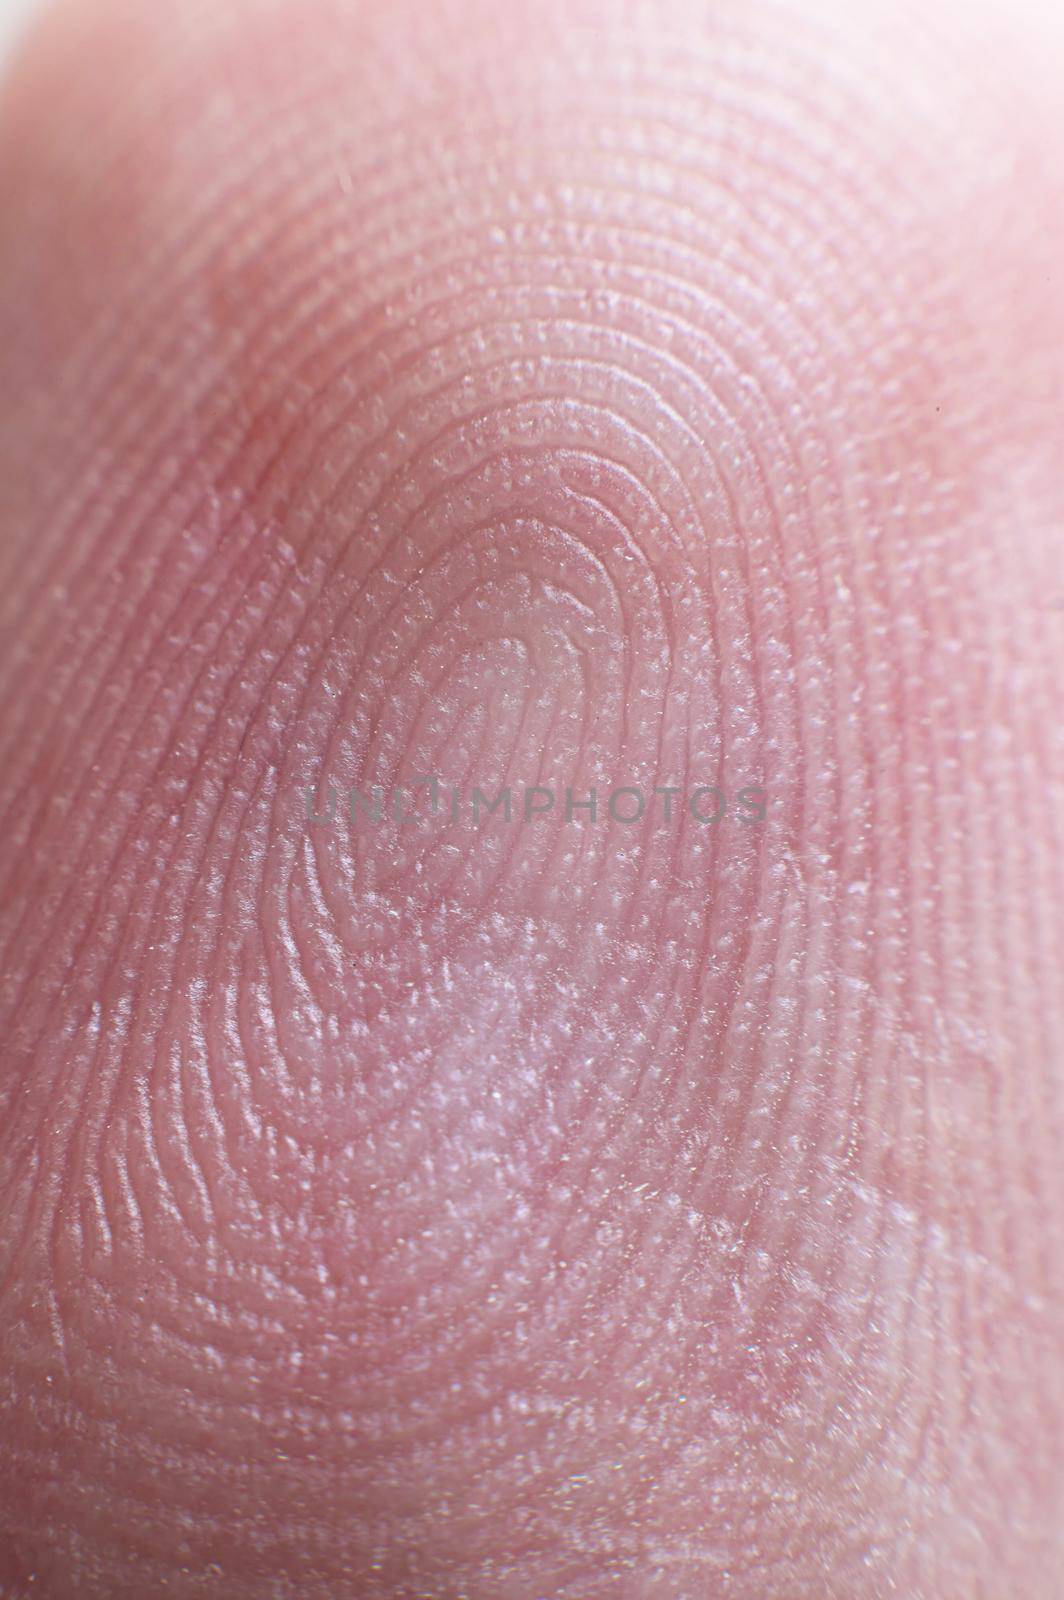 Close-up surface Fingerprint - extreme macro photography. Biometrics and fingerprinting.